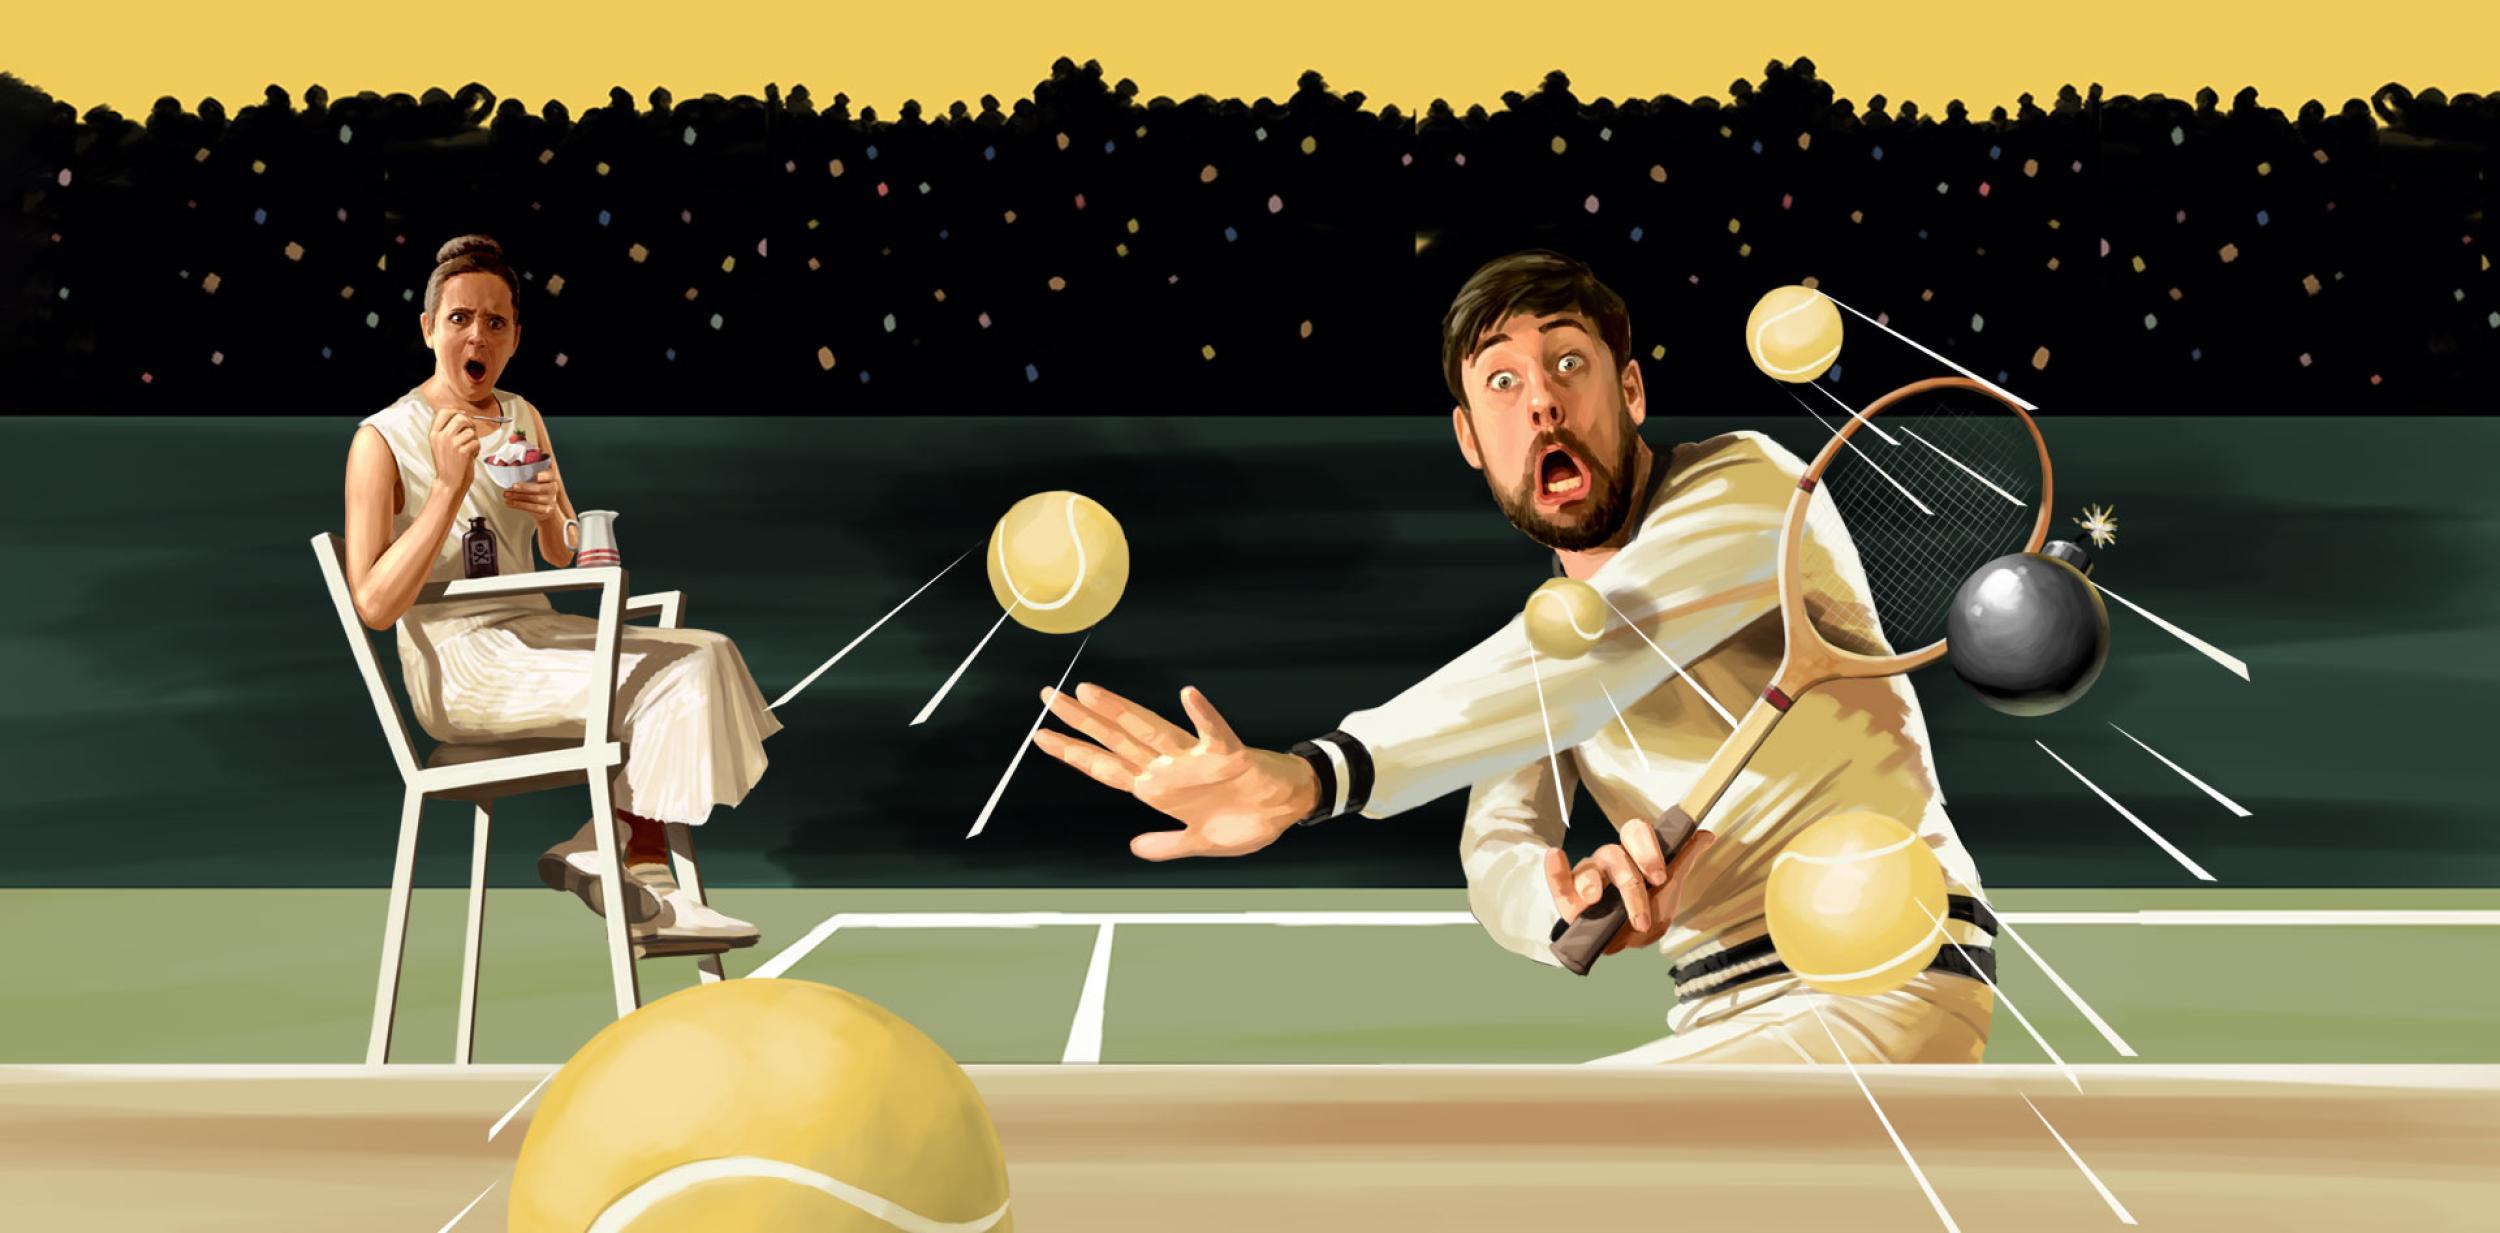 Illustration of a tennis match